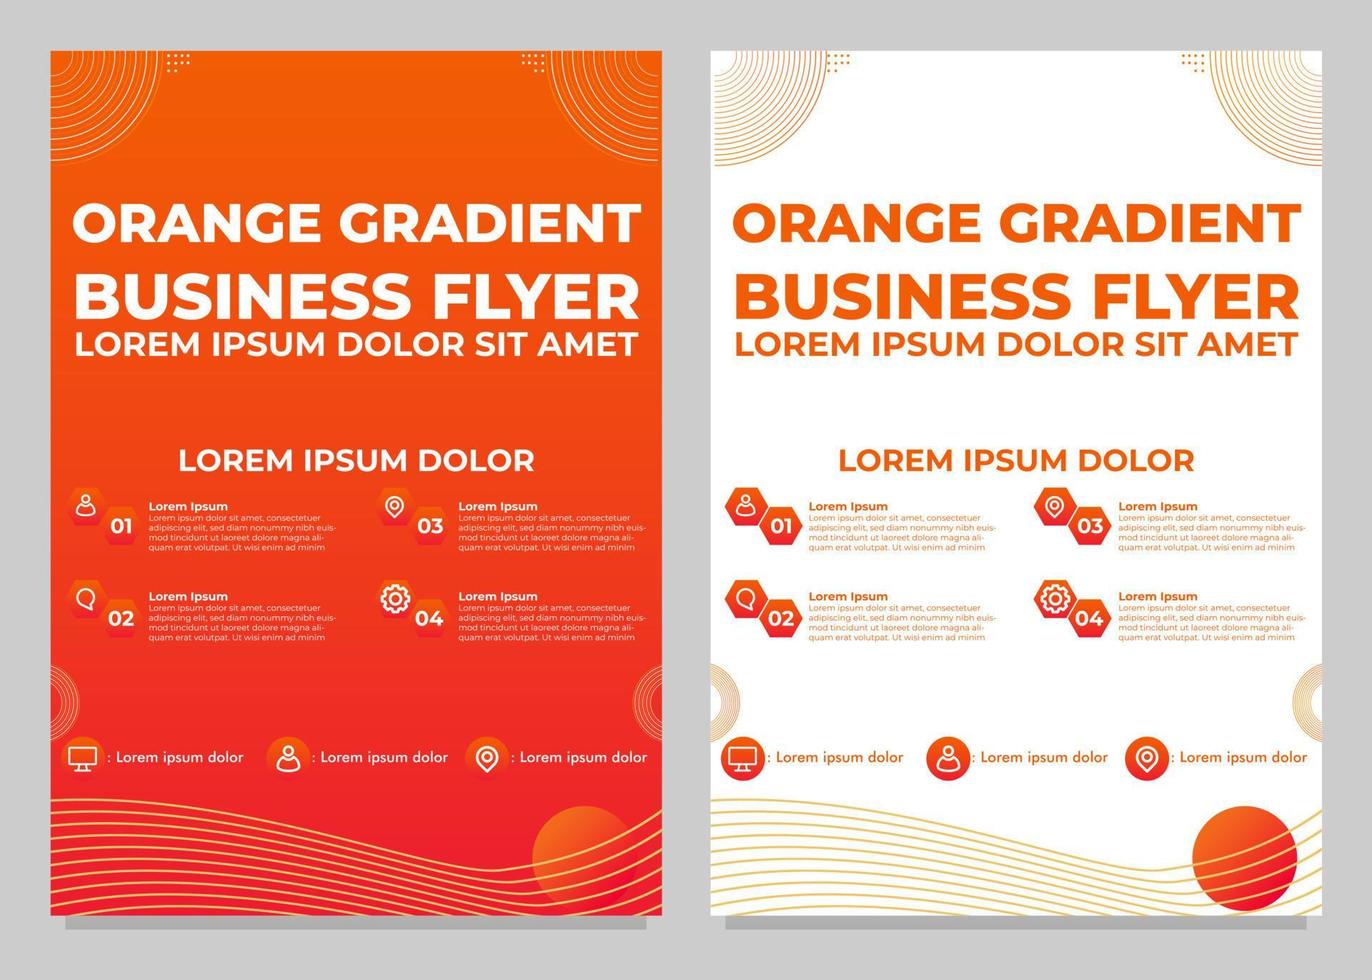 orange gradient business flyer template collection vector